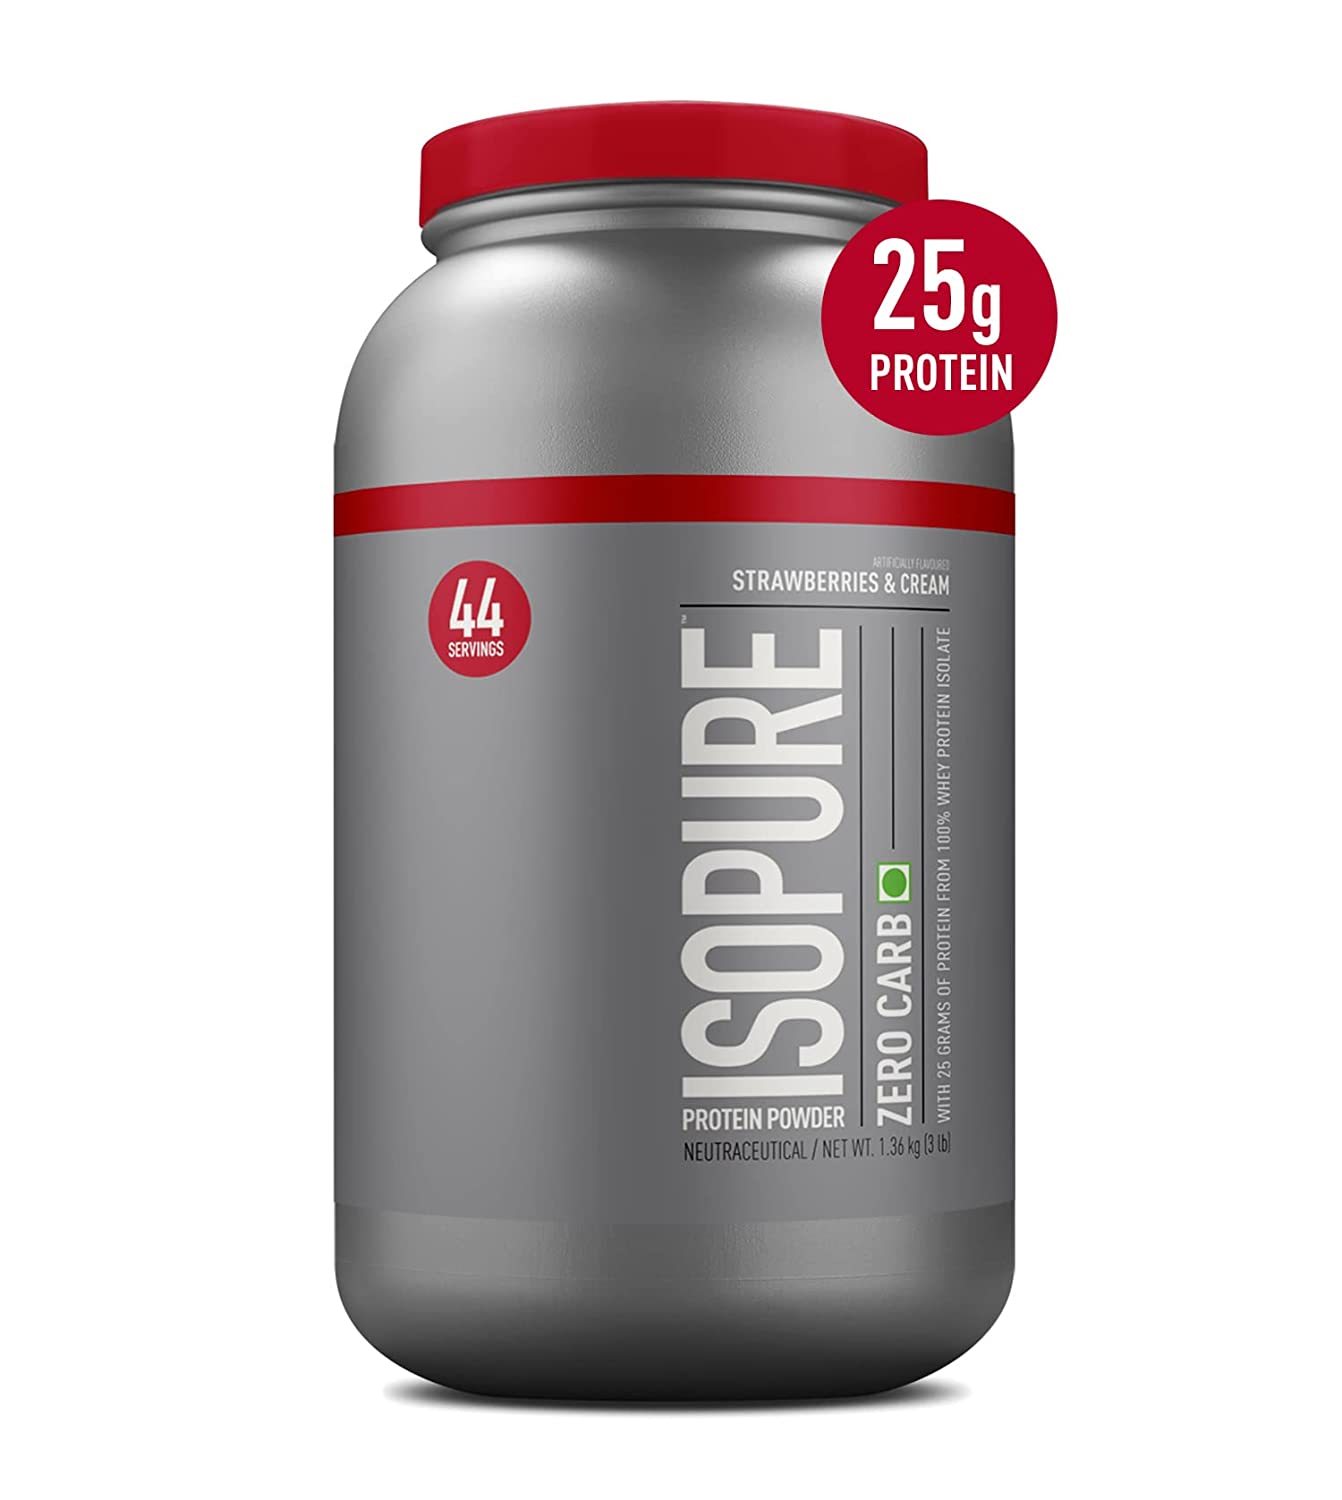 Isopure Zero Carb 100% Whey Protein Isolate Powder – 3 lbs, 1.36 kg (Strawberries & Cream), , 25g Protein per serve, Lactose-Free, Gluten-Free, Vegetarian protein for Men & Women.